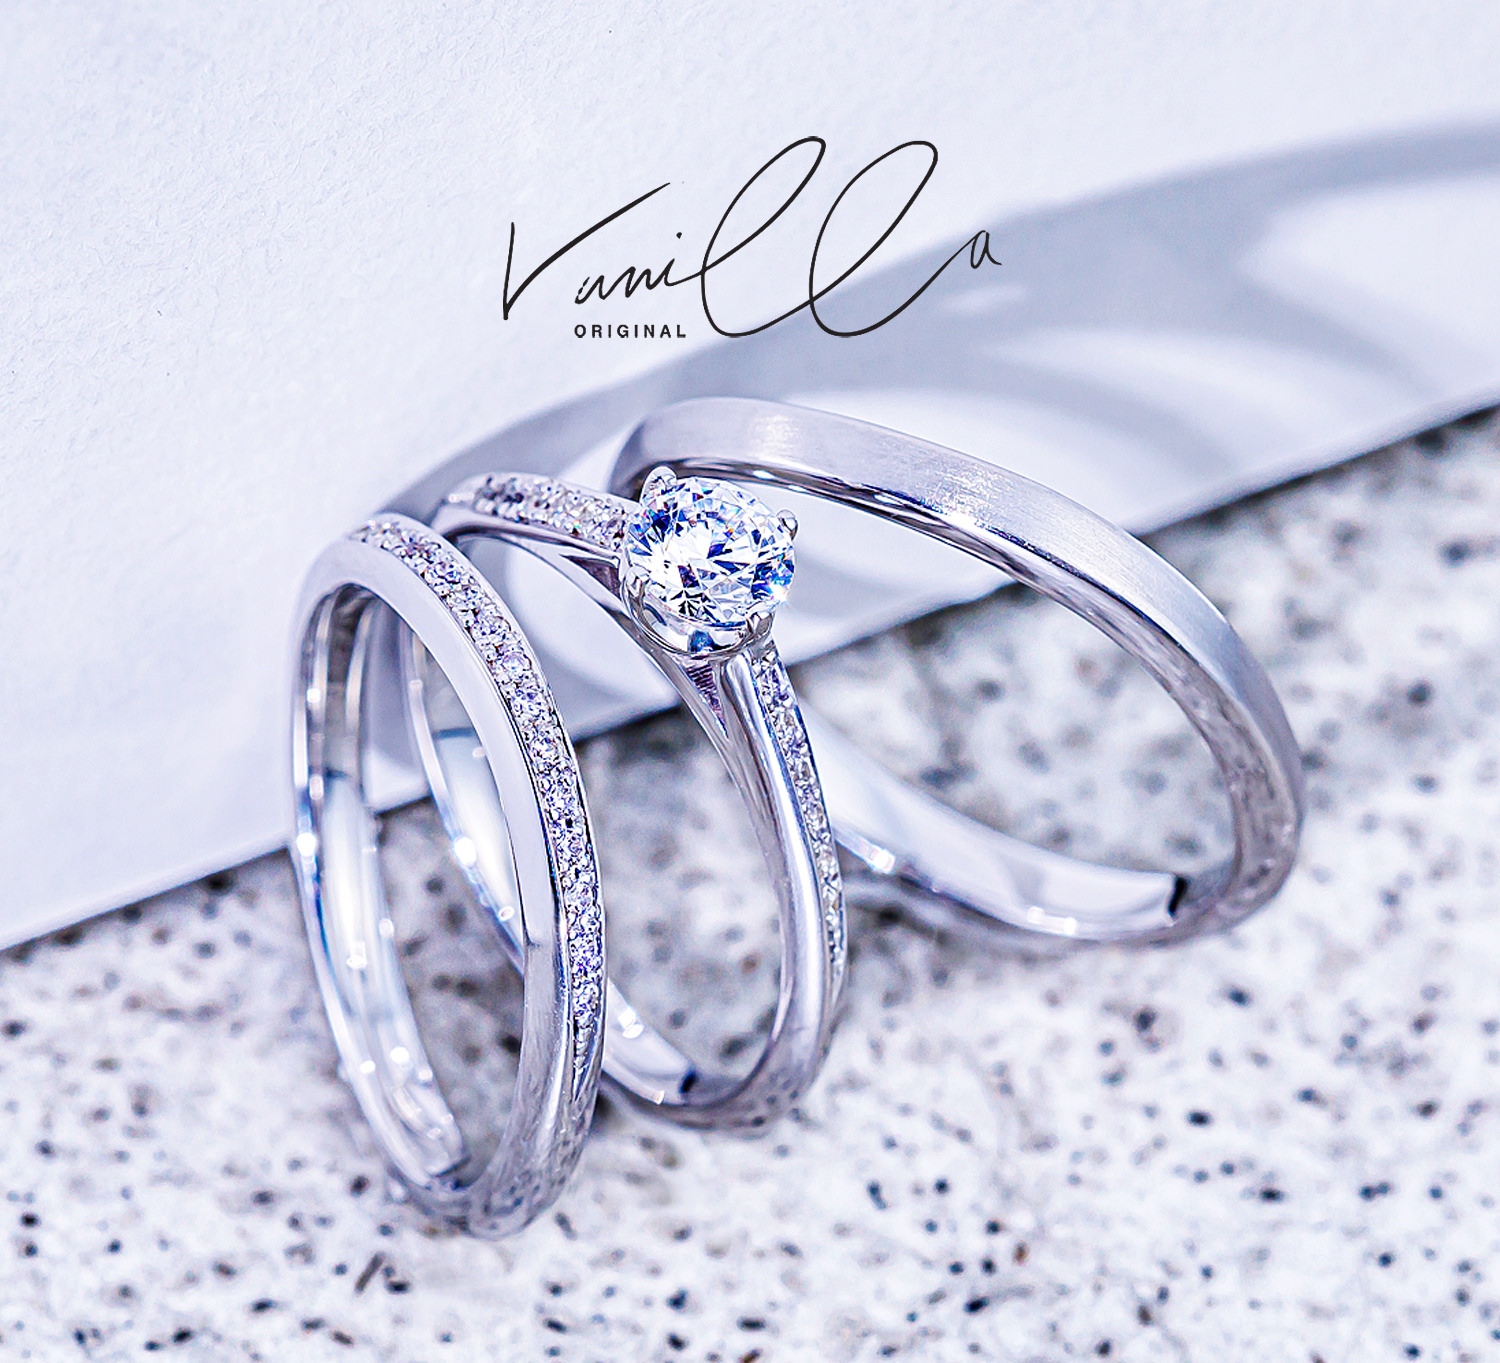 VanillaORIGINALヴァニラオリジナルの婚約指輪と結婚指輪でエンゲージリングとマリッジリングでセットリングと3本セット